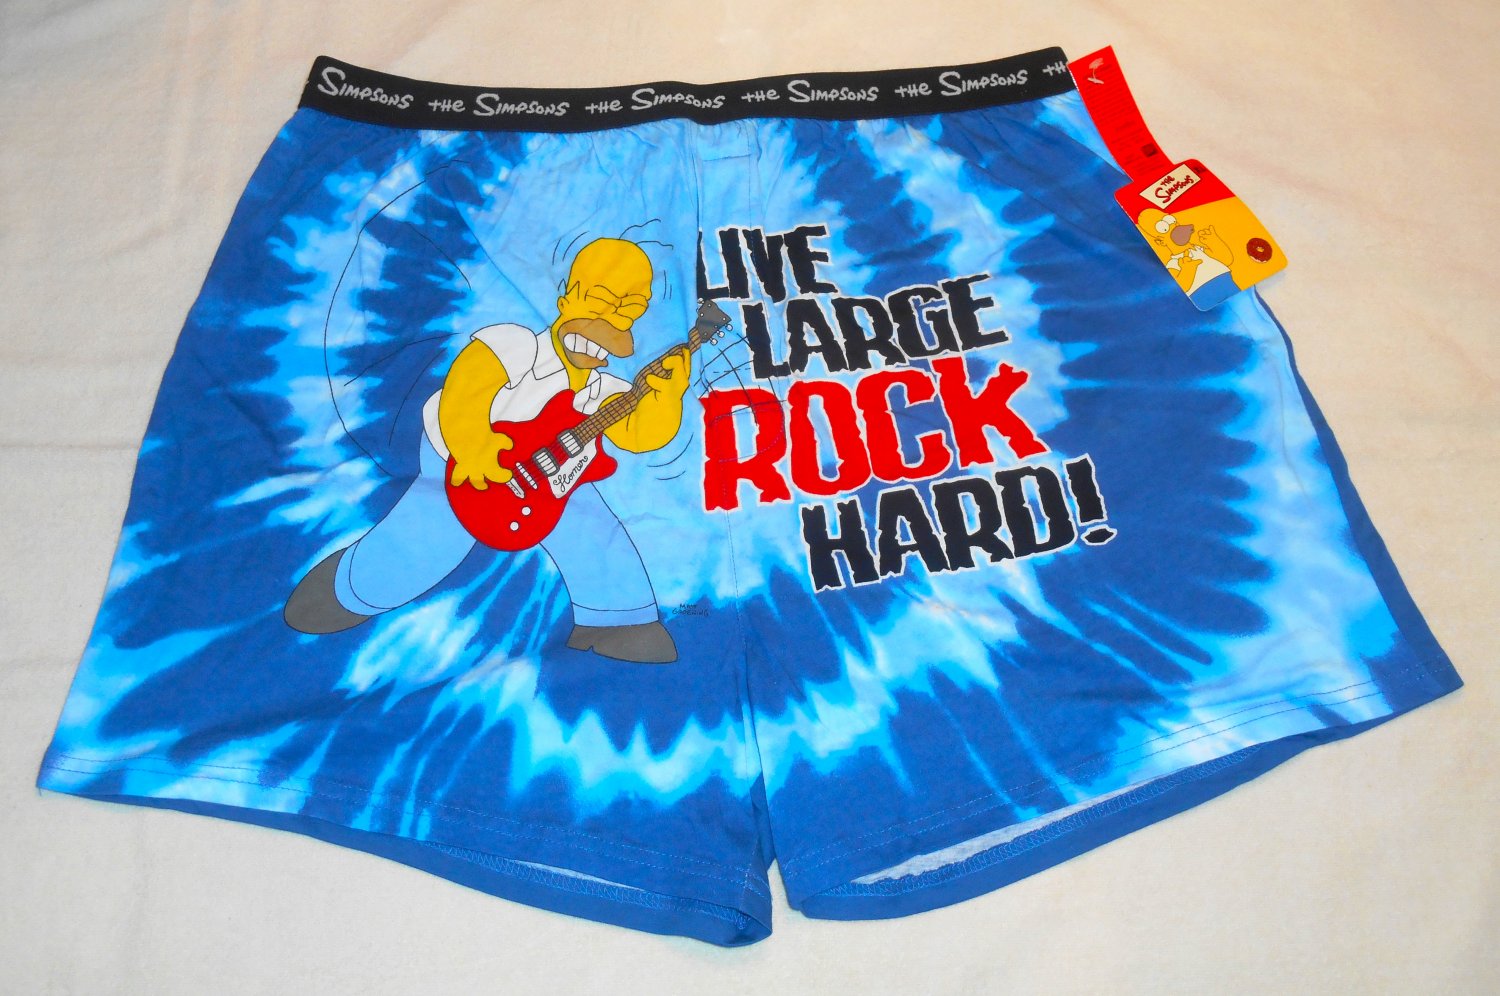 Homer Simpson Live Large Rock Hard Boxer Shorts Size Medium M Blue Guitar Underwear NWT 2004